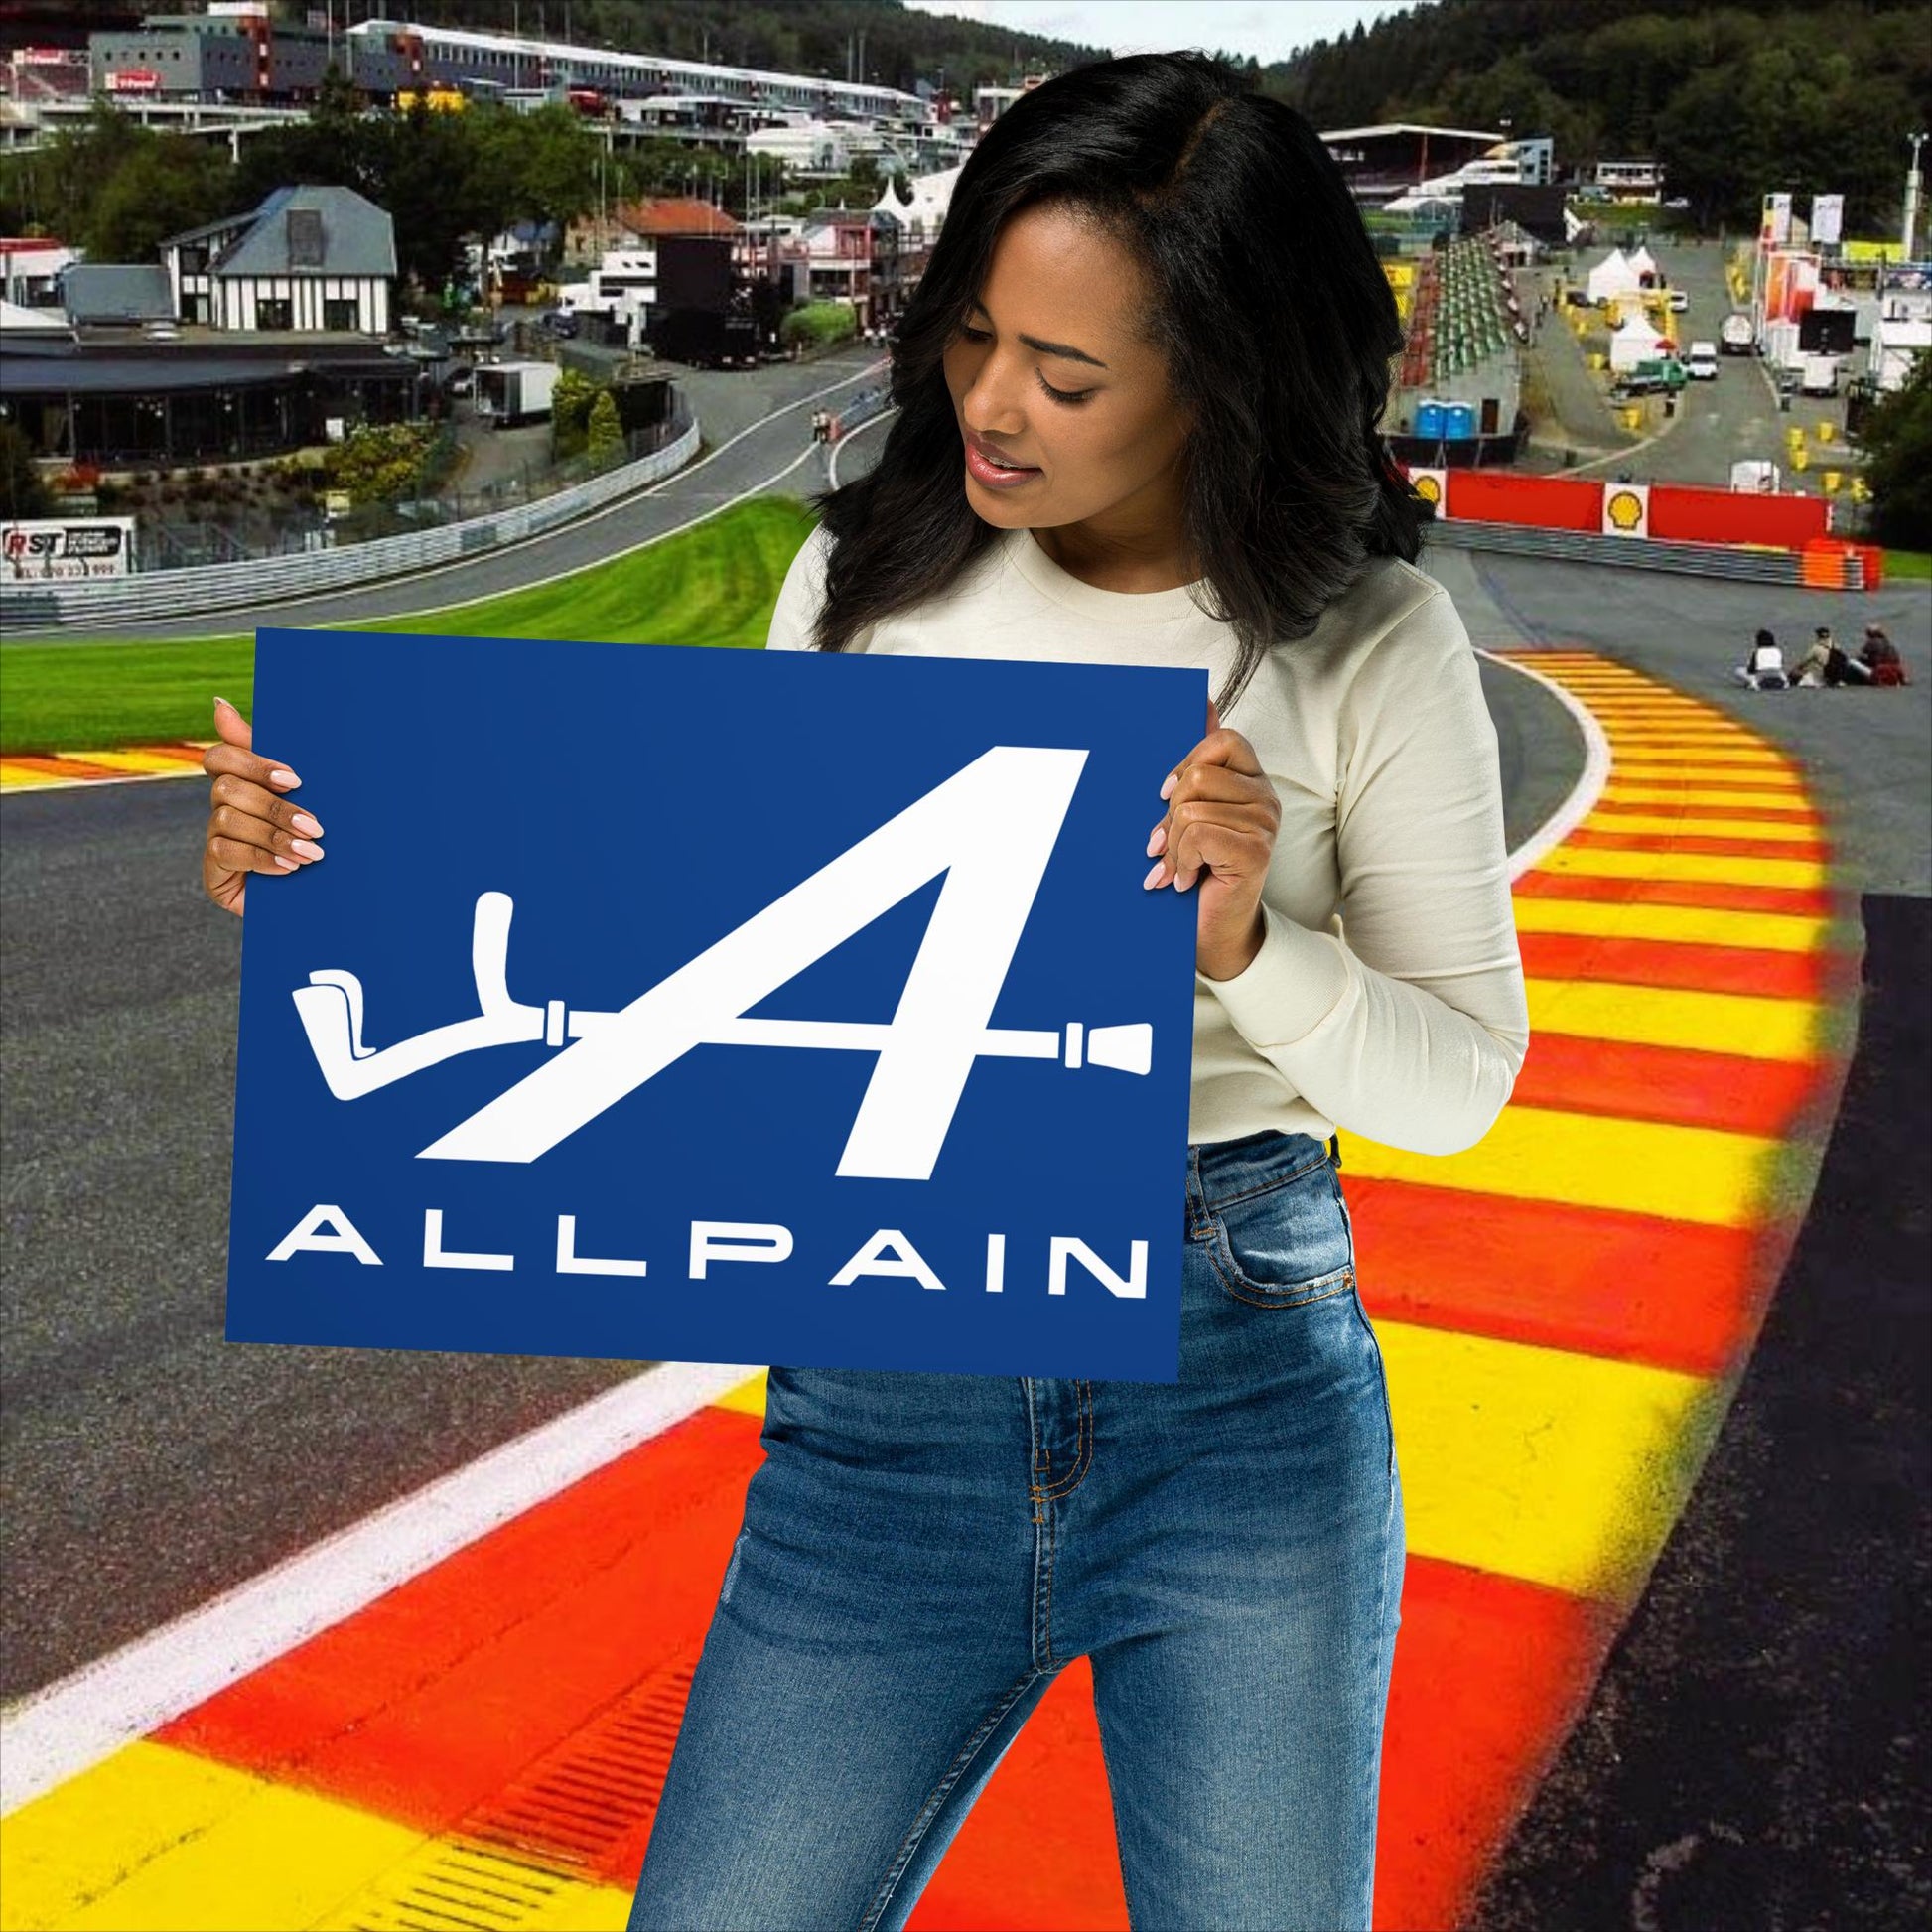 Allpain Alpine F1 Formula 1 Pierre Gasly Esteban Ocon Alpine Poster Next Cult Brand Alpine, F1